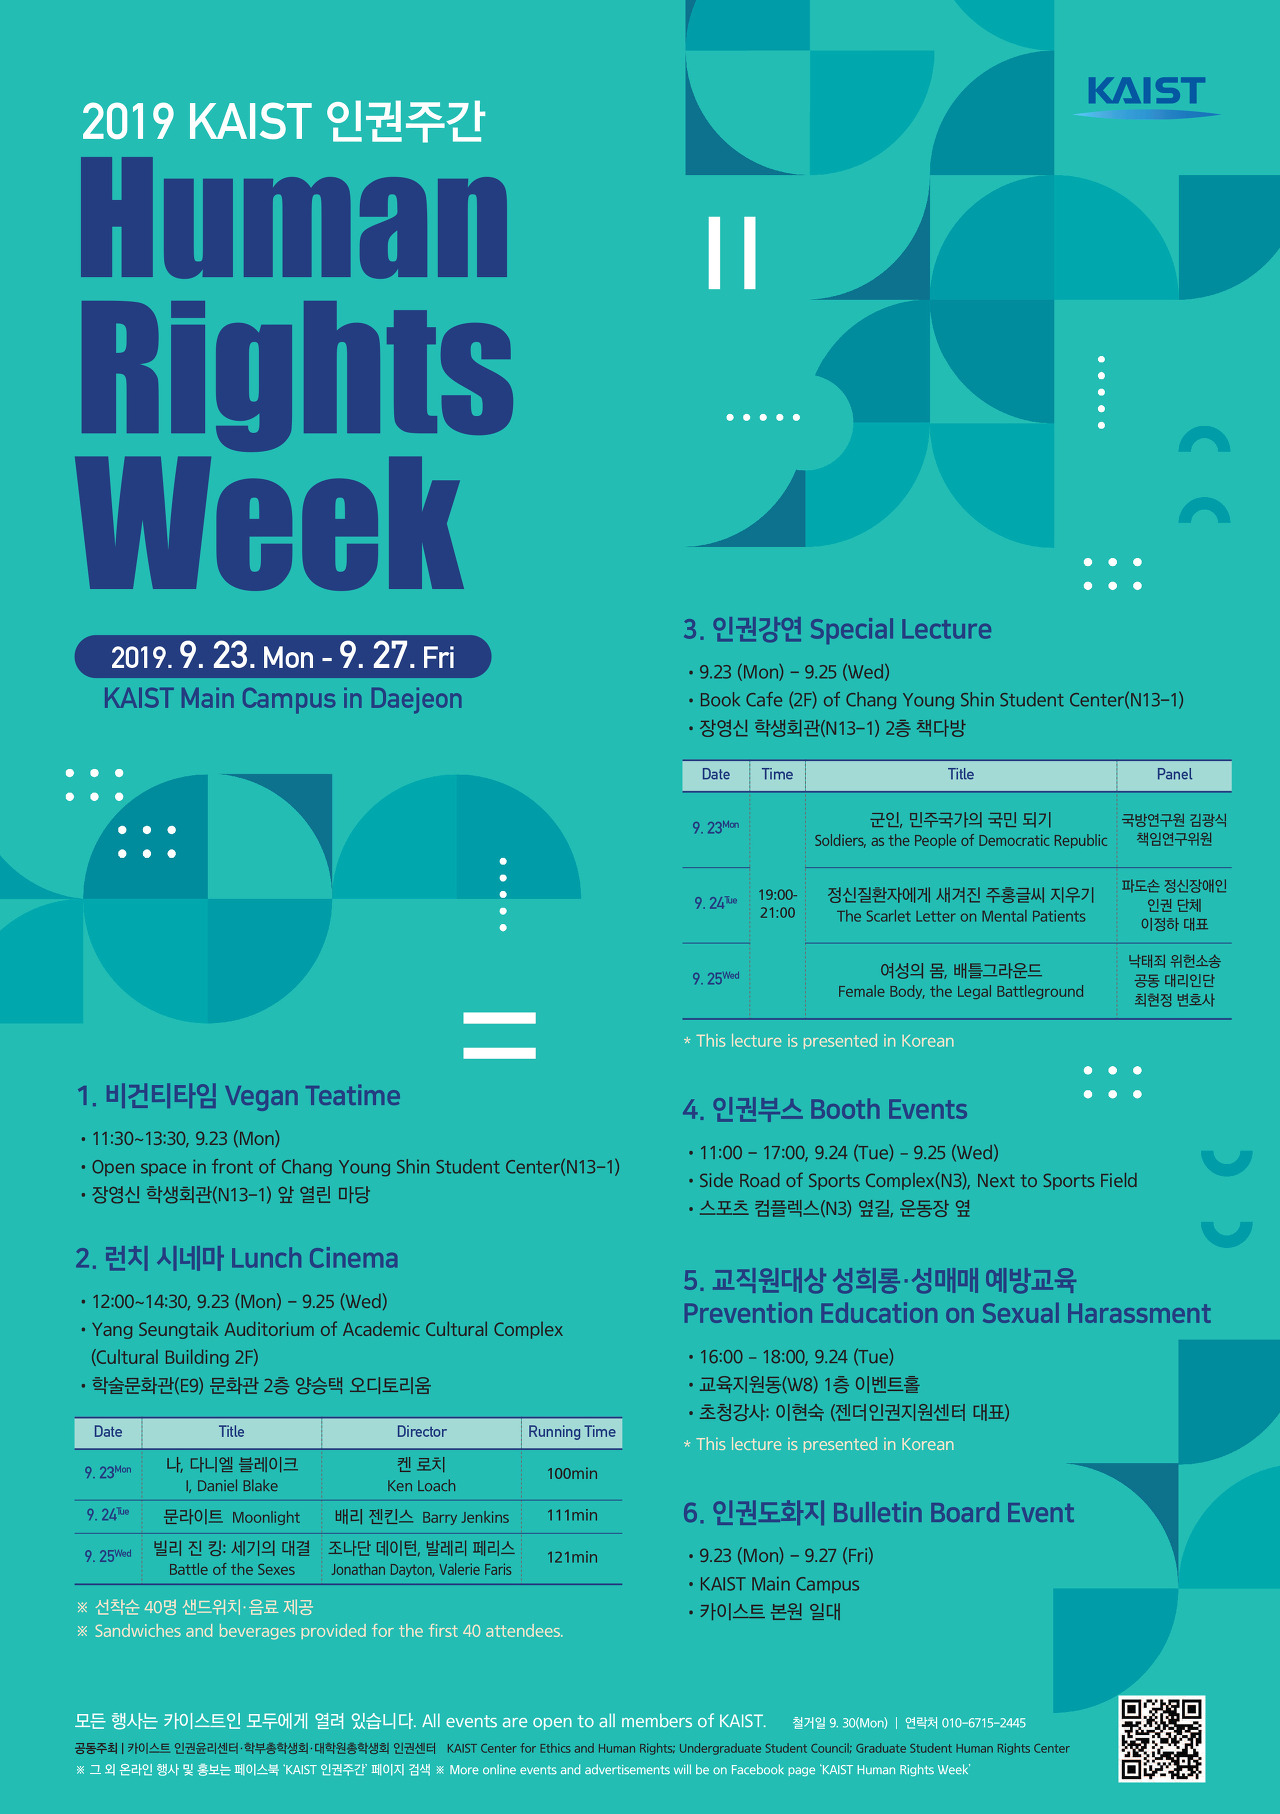 Human Rights Week 2019